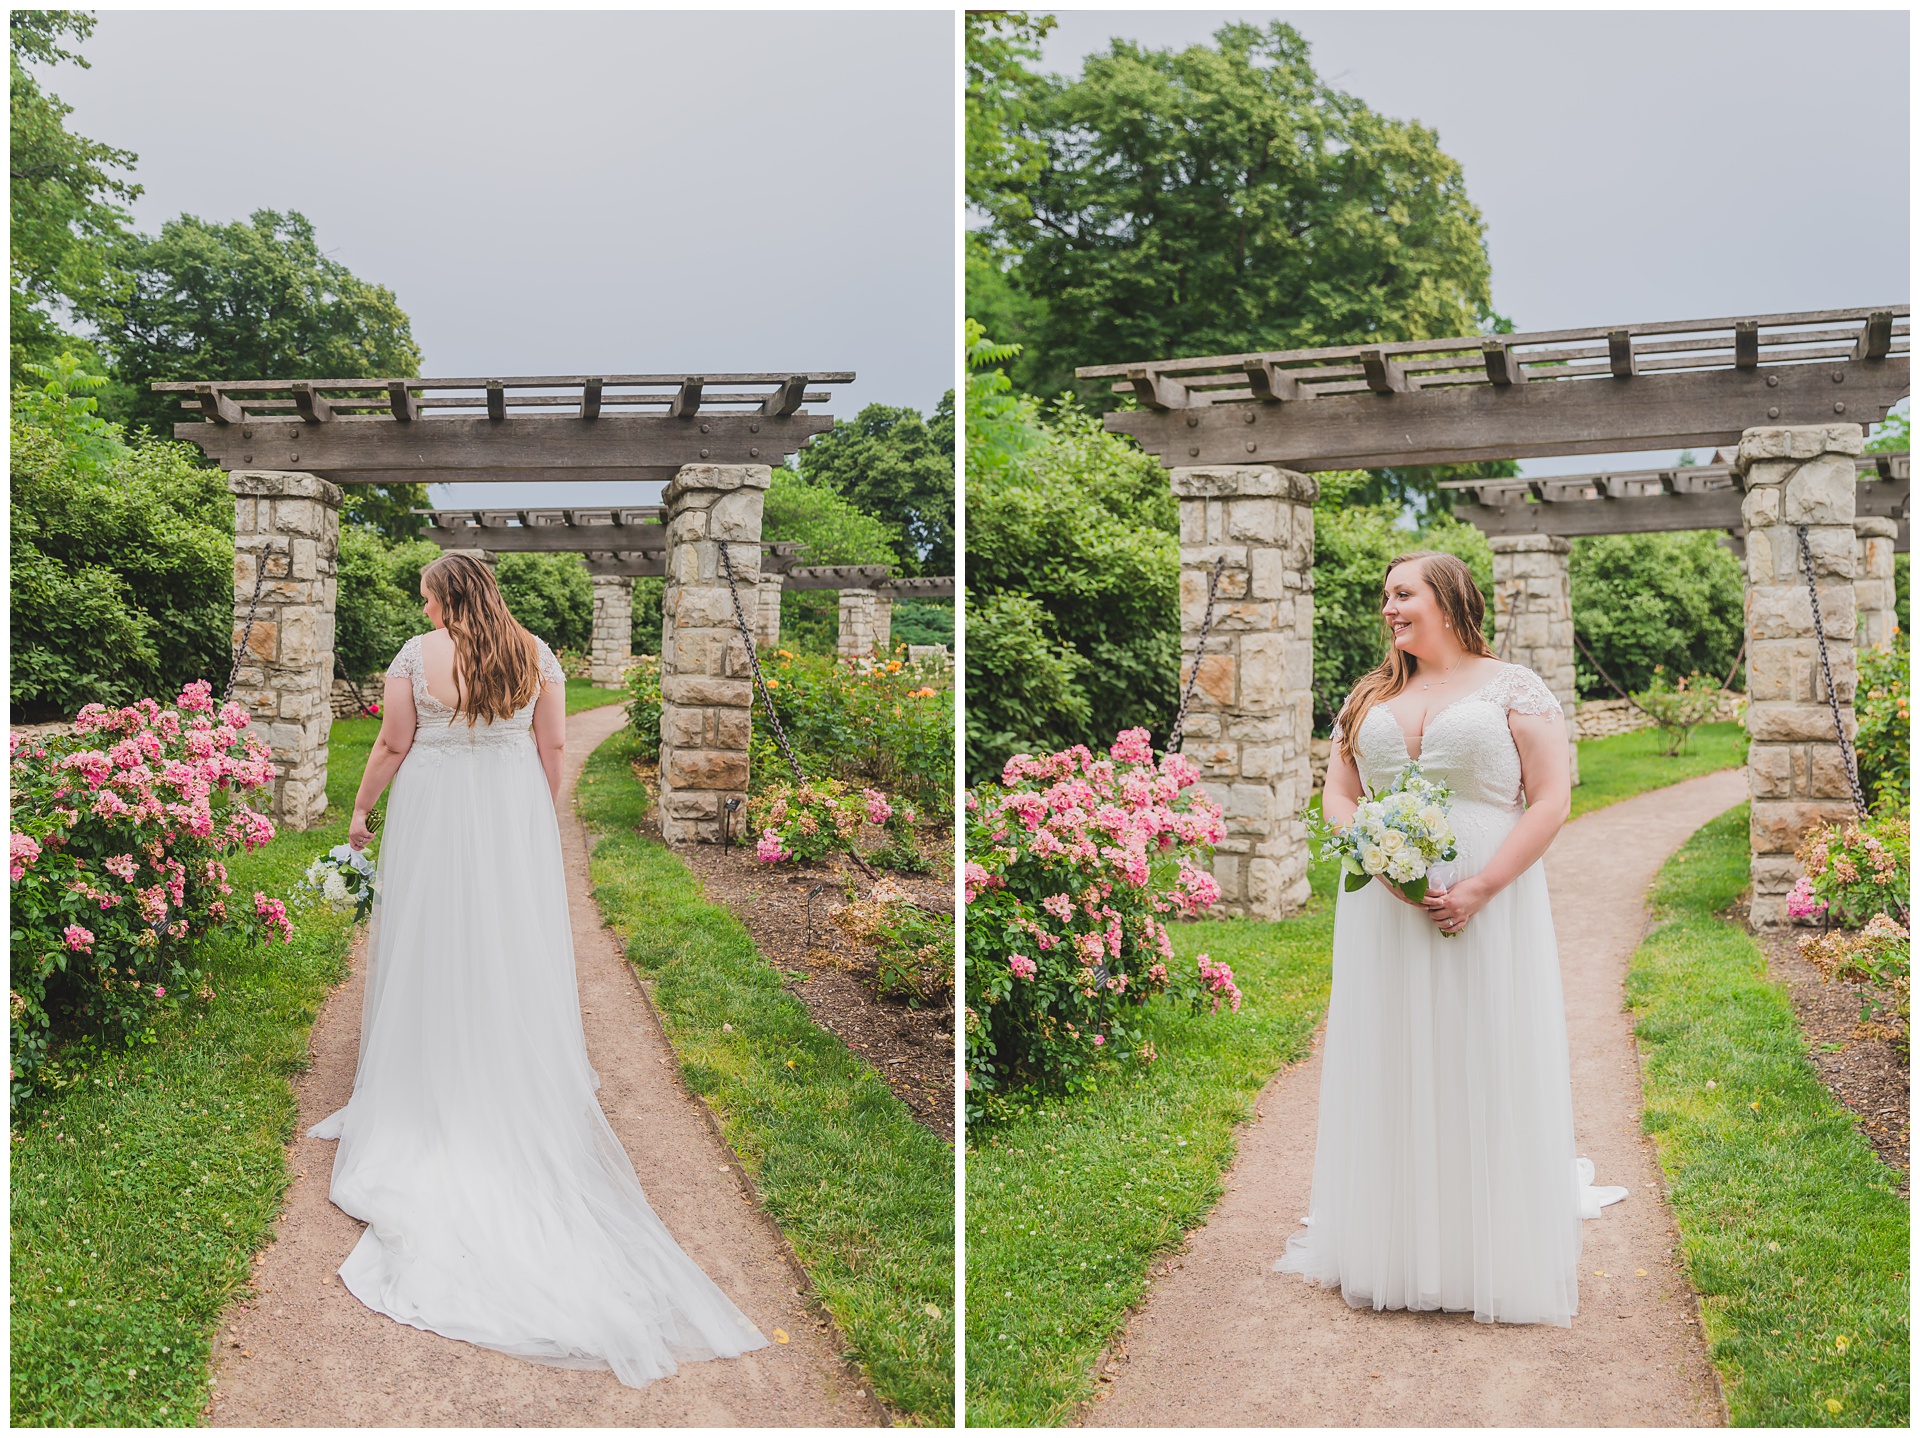 Wedding photography at Loose Park by Kansas City wedding photographers Wisdom-Watson Weddings.